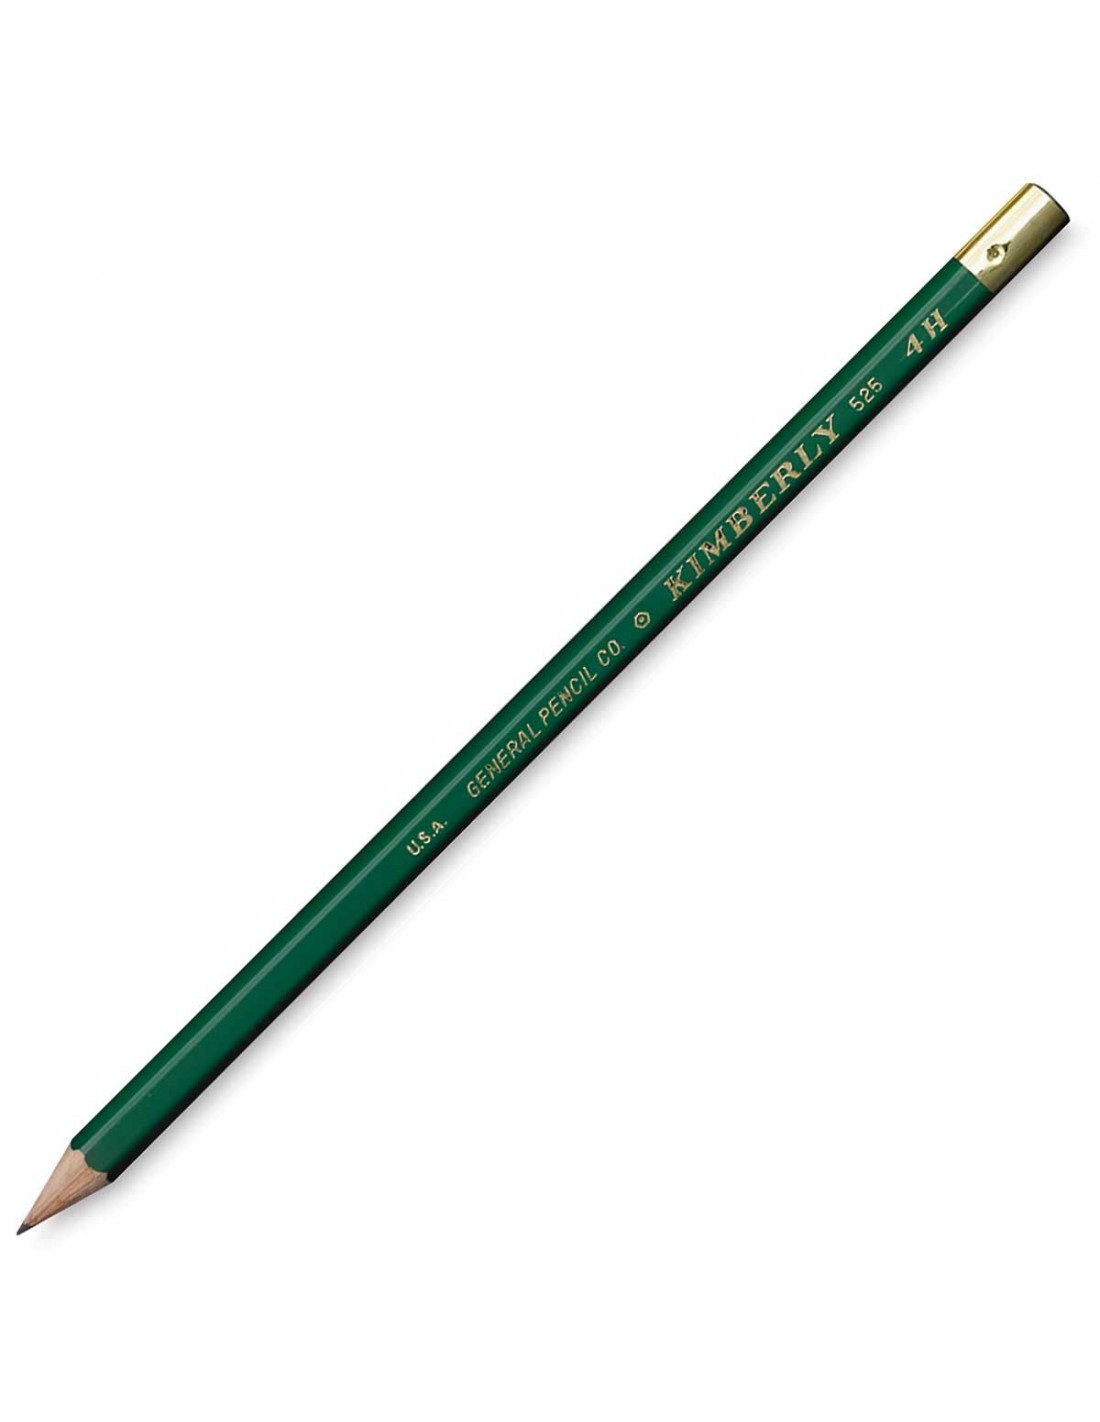 Crayon graphite 4H - Kimberly 525 - General Pencil Company